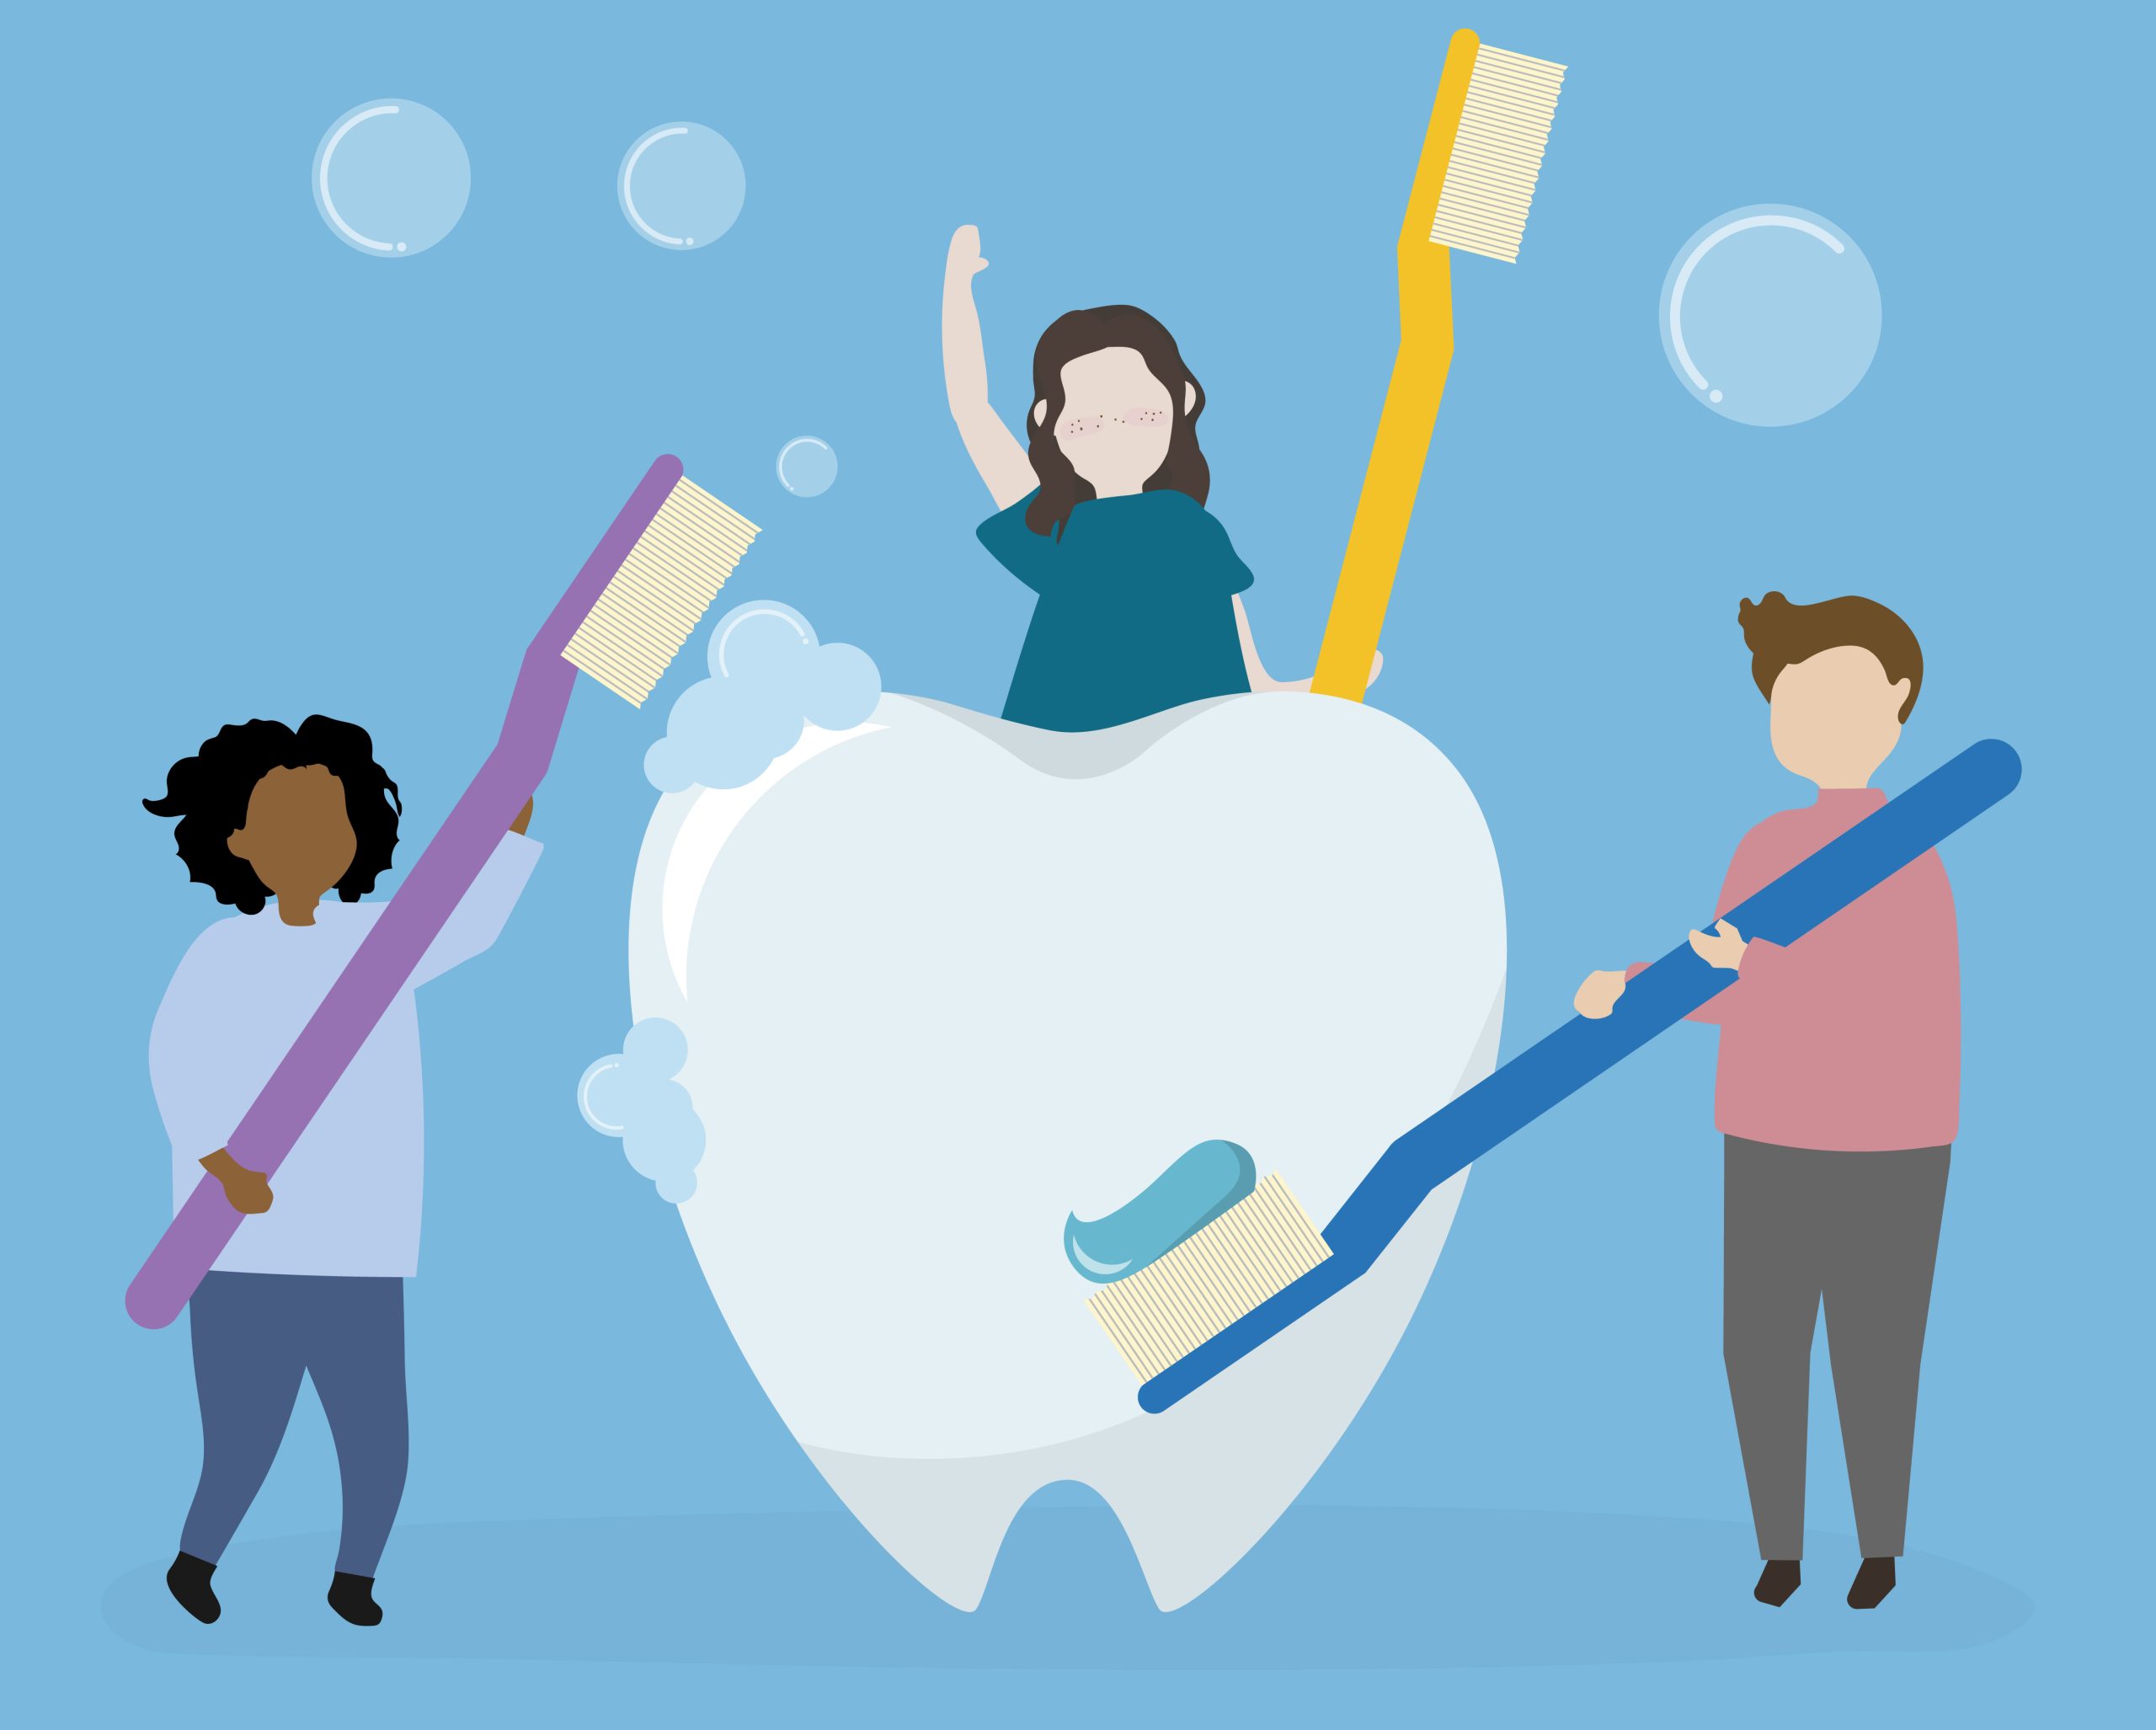 Dental hygiene and health care